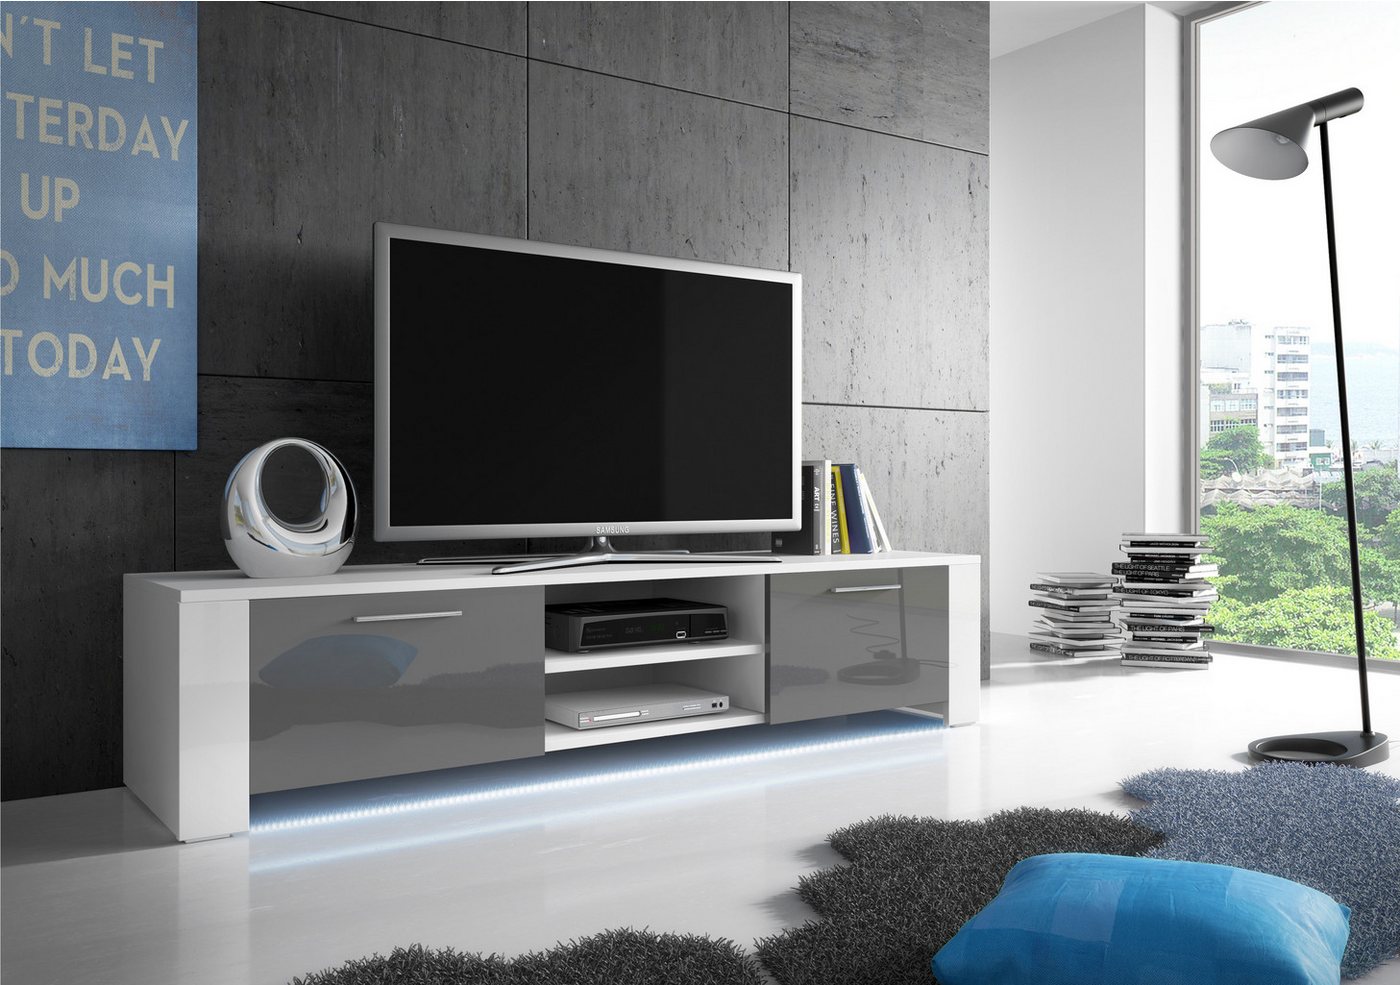 Beautysofa TV-Schrank Modern, stilvoll, TV-Schrank mit Beleuchtung LED TV SCHRANK IX (Farbe:grau,schwarz, weiß) B:166/H:40/T:45cm von Beautysofa